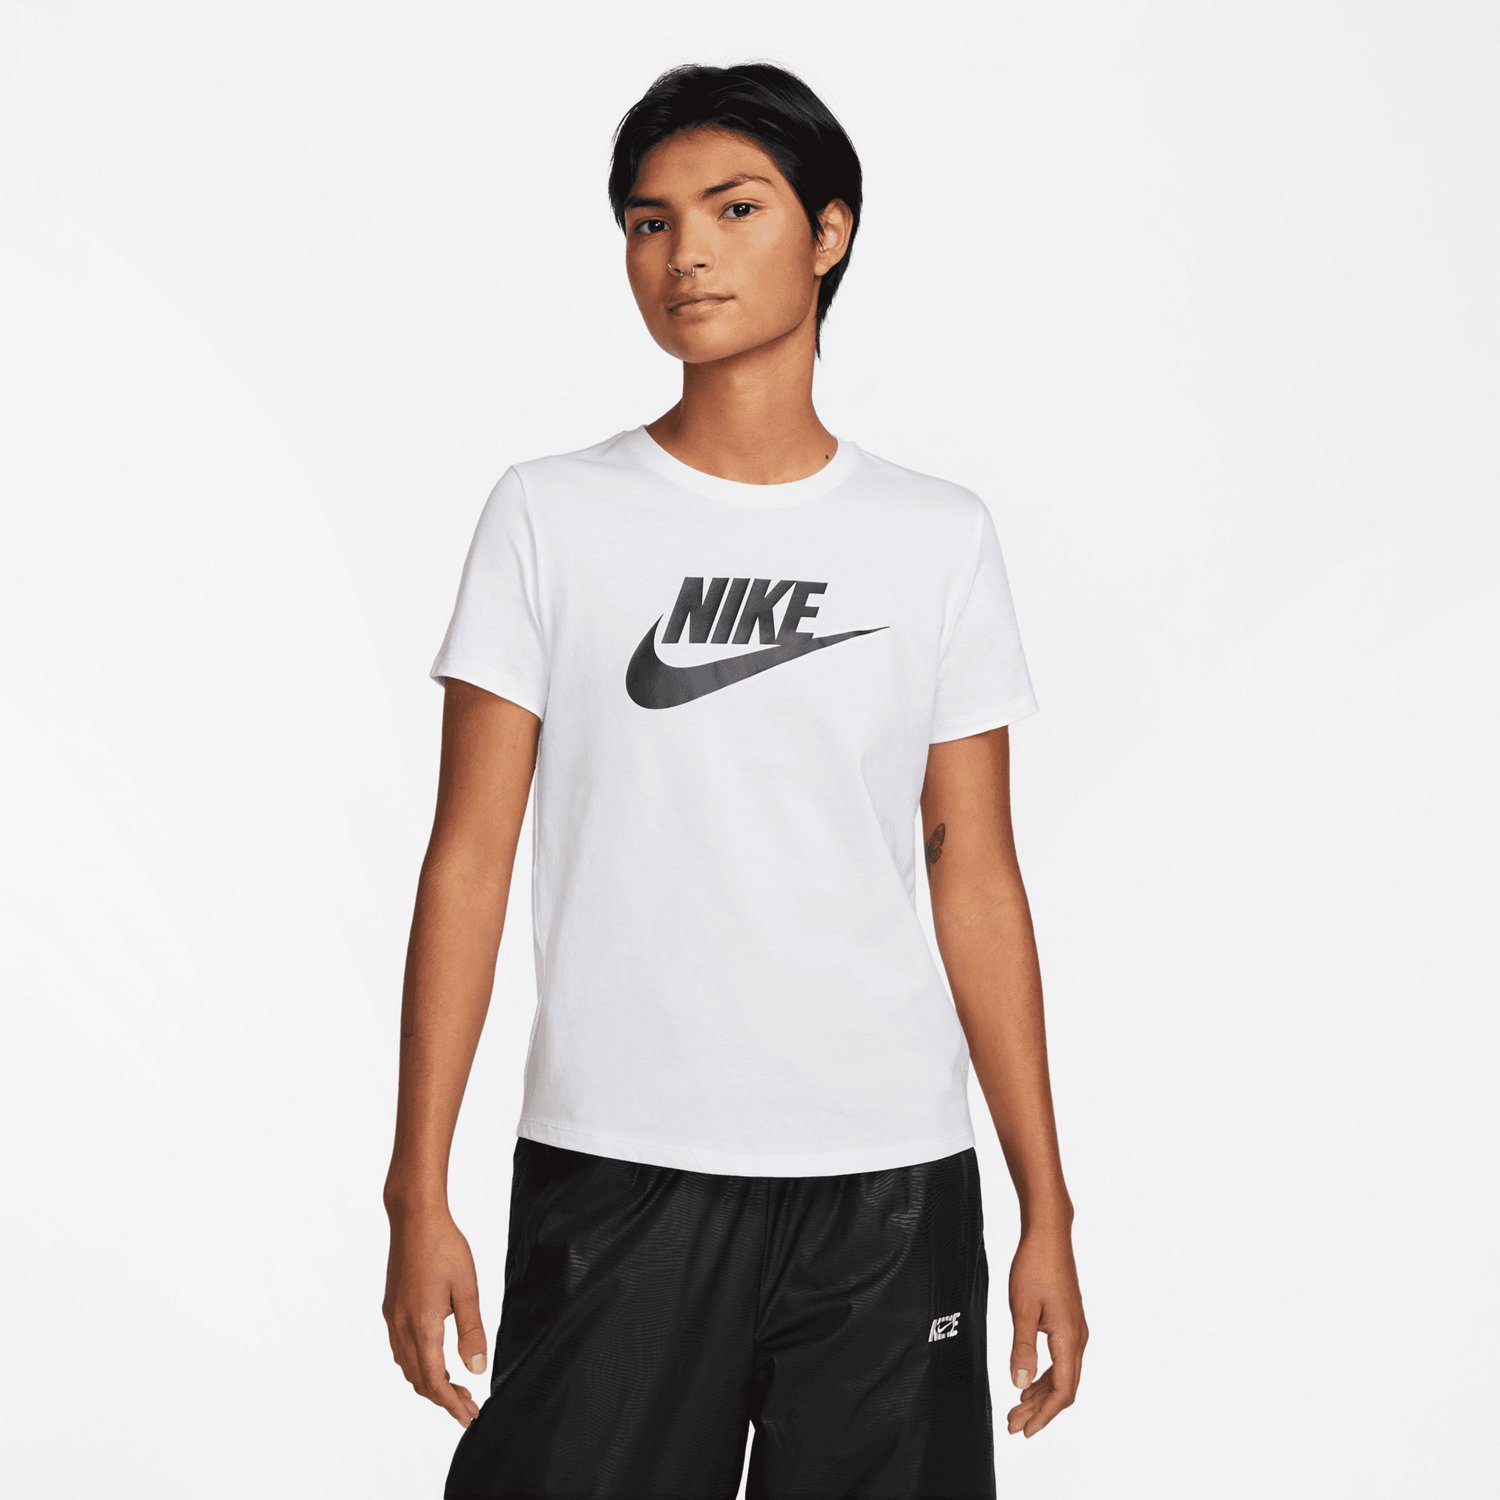 Nike One Dri-FIT Crew-Neck LBR Sweatshirt Women - black/white